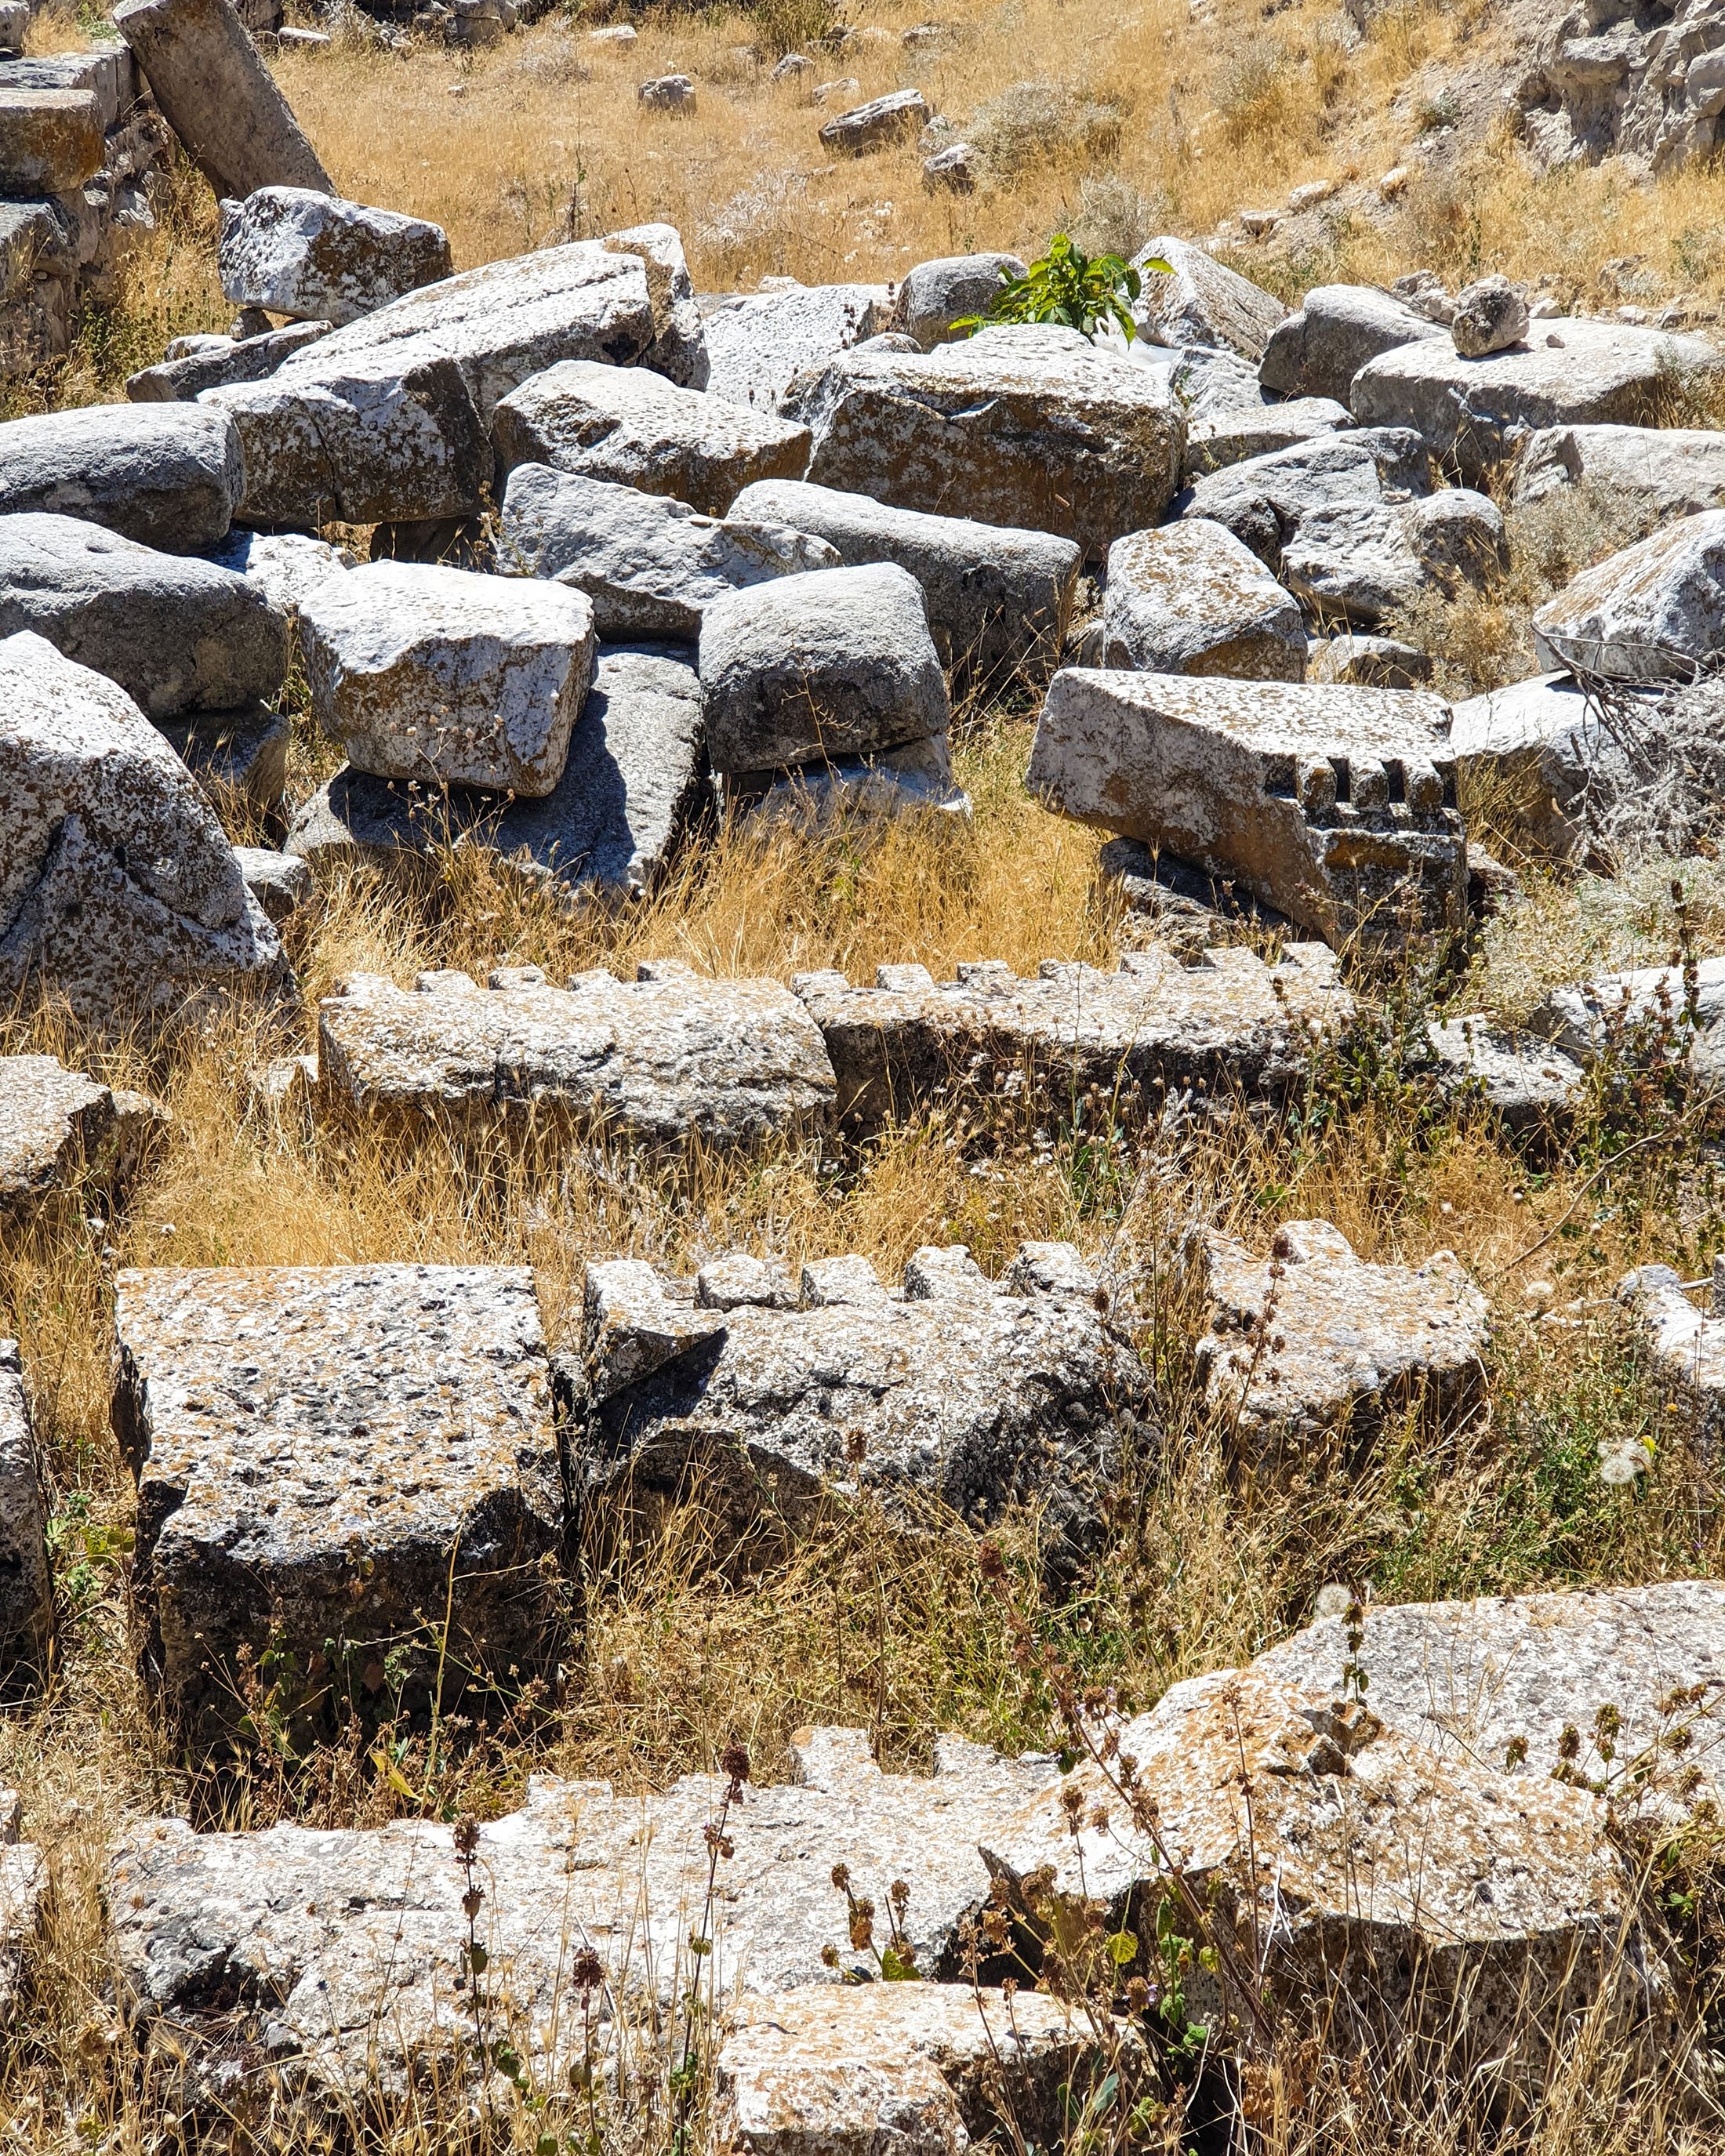 Architectural fragments in Agora at Pessinus. (Photo by Argun Konuk)